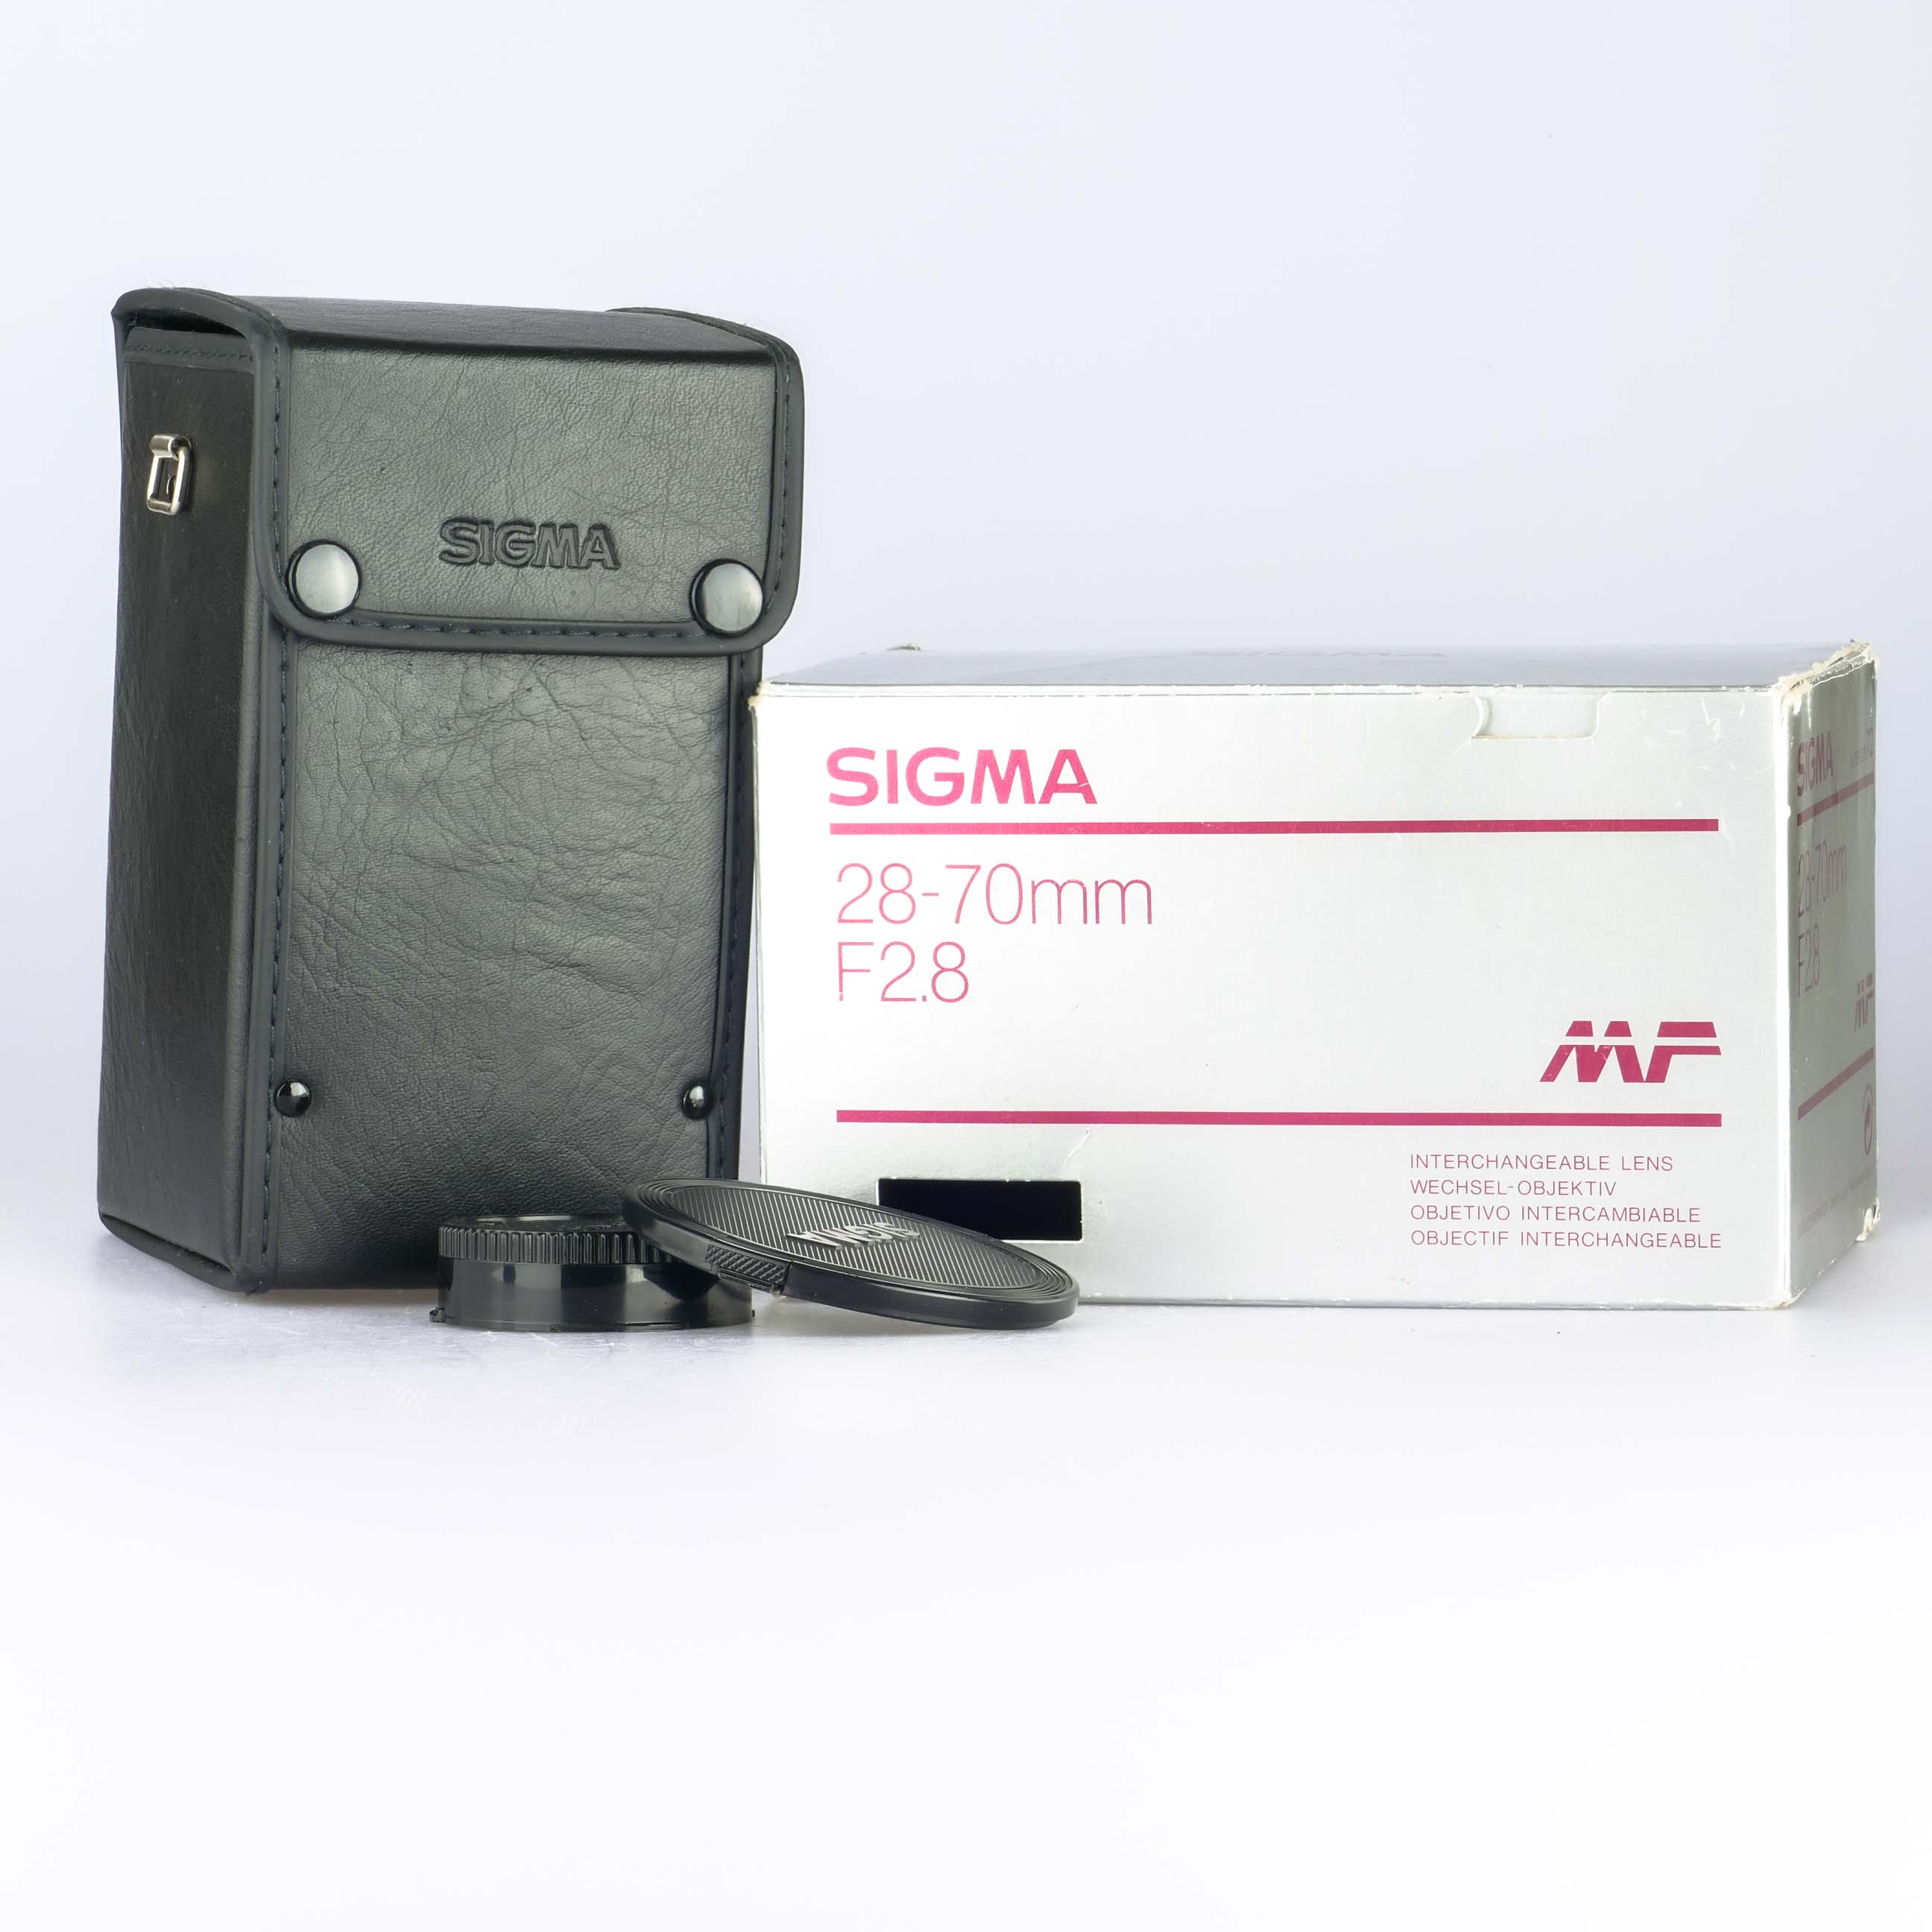 Sigma 28-70mm f/2.8